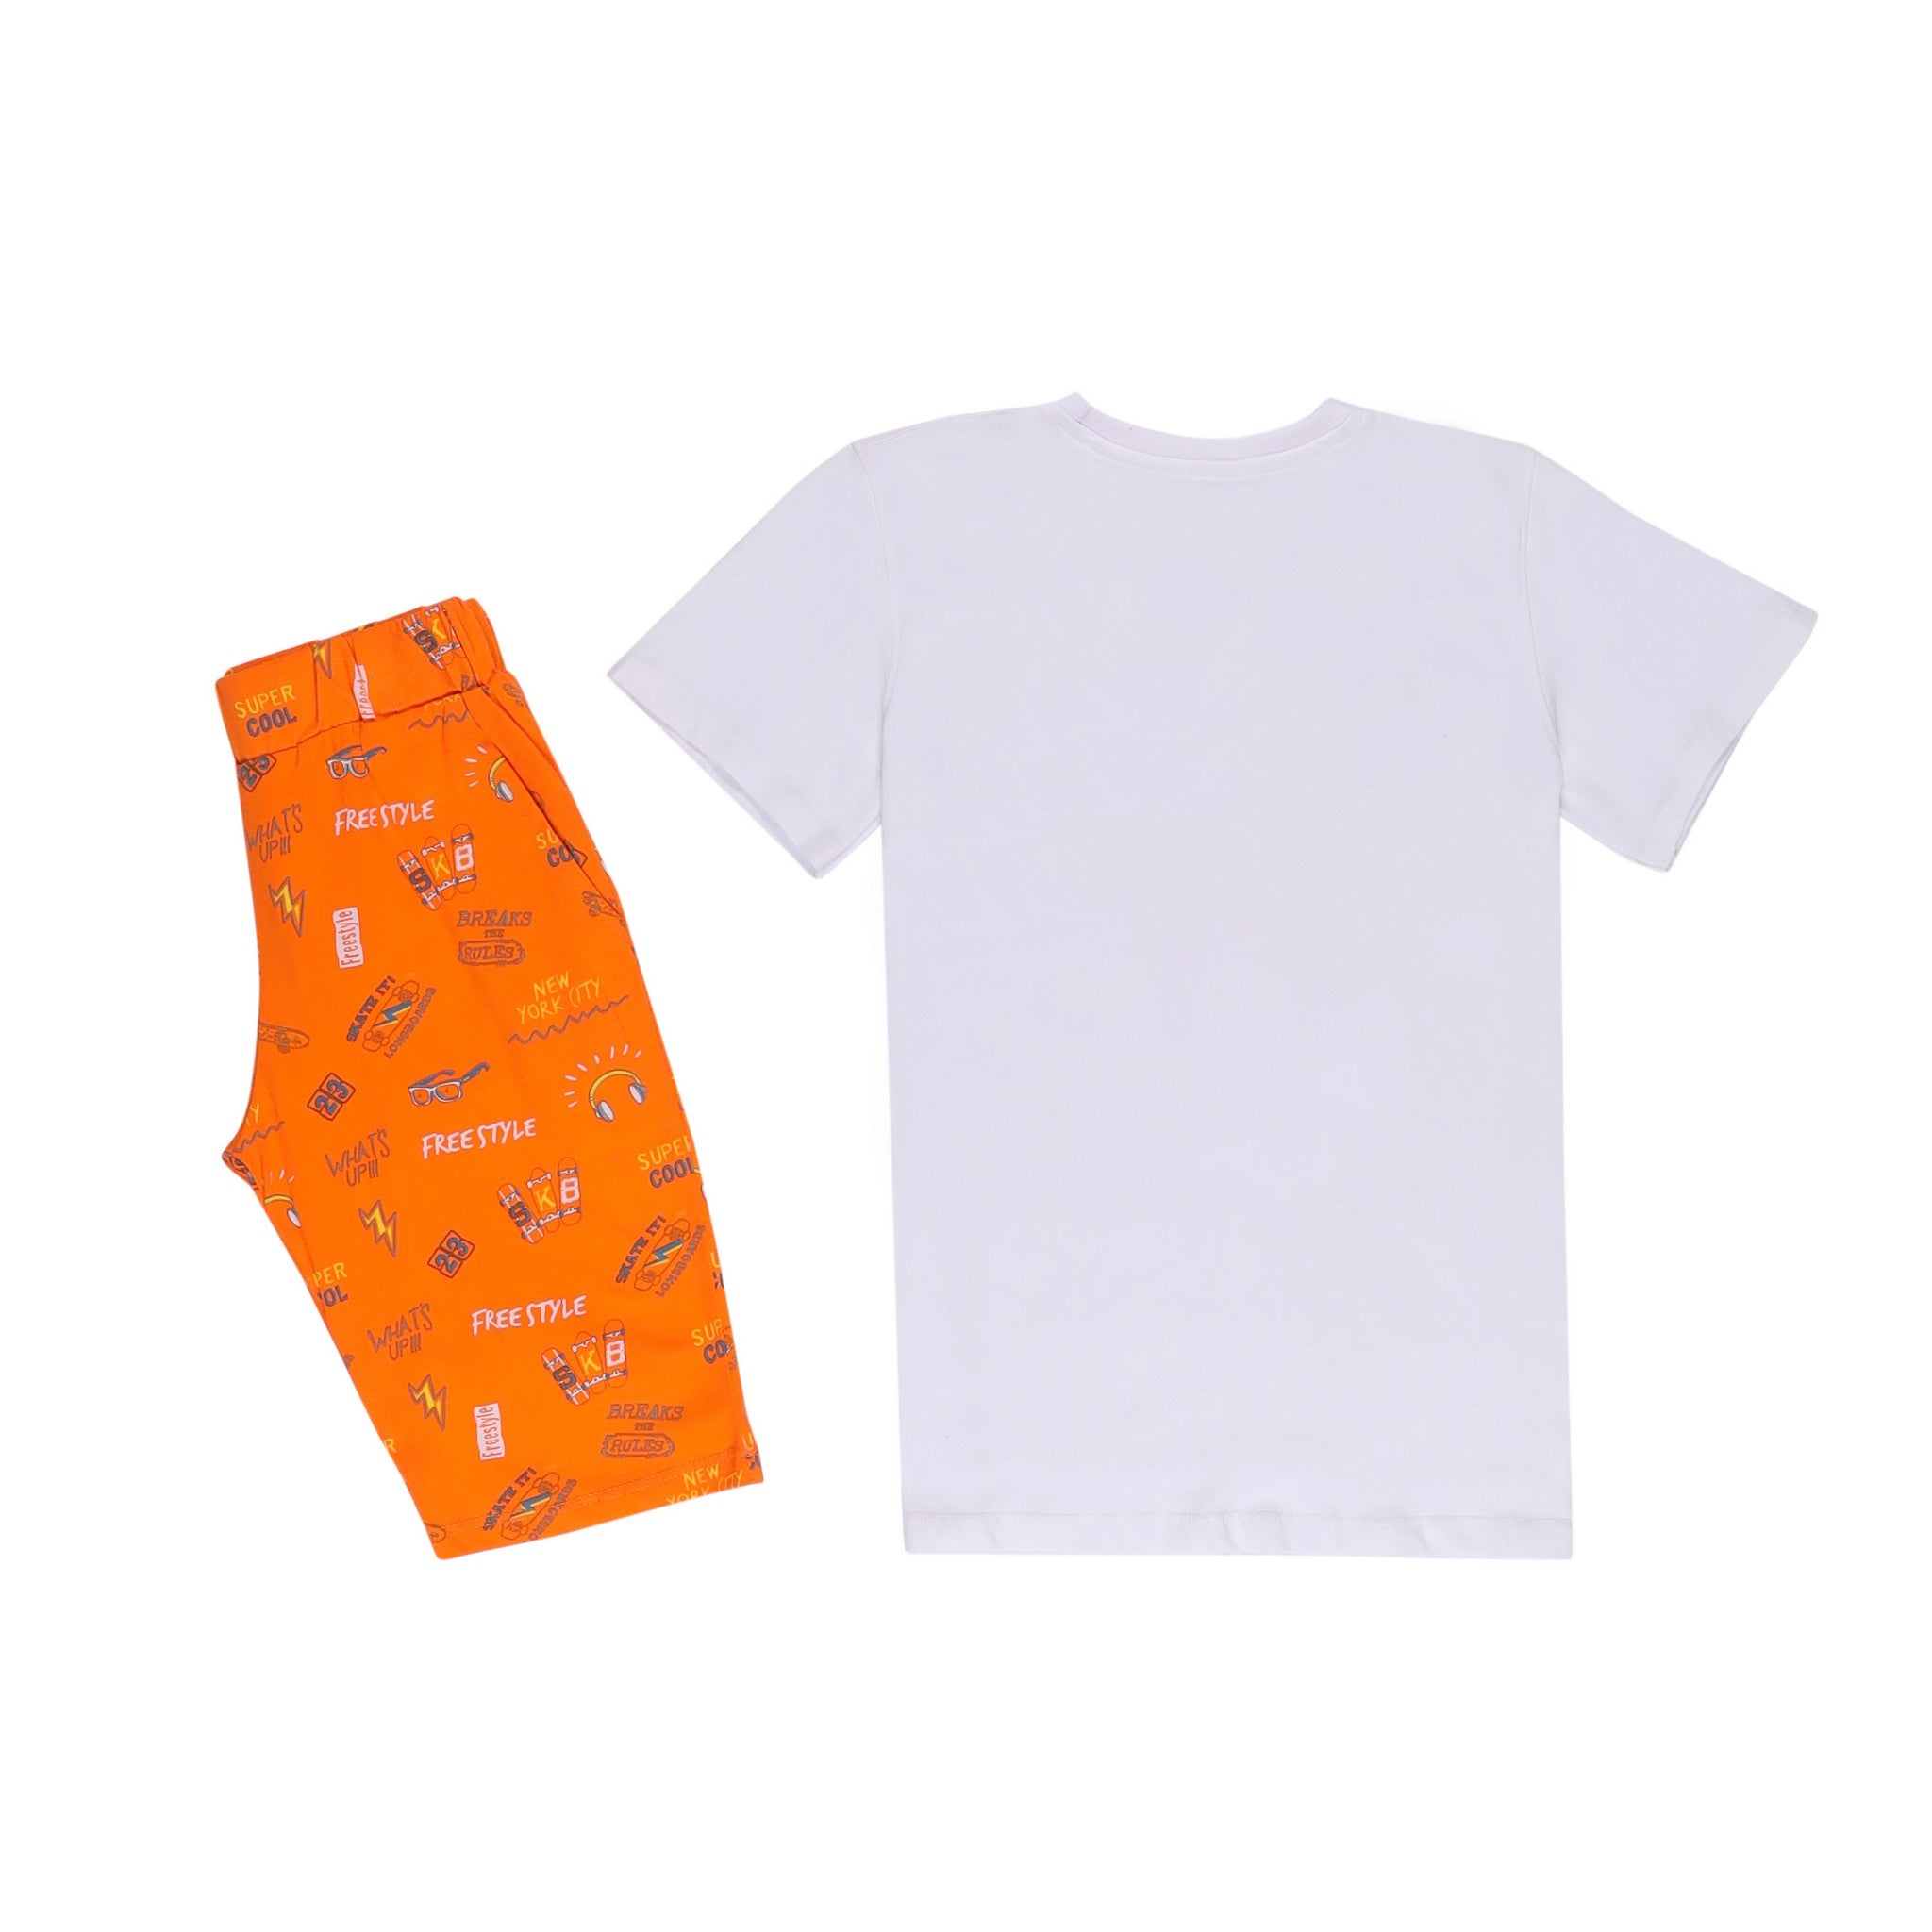 SK8 Print Top and Short Pajama